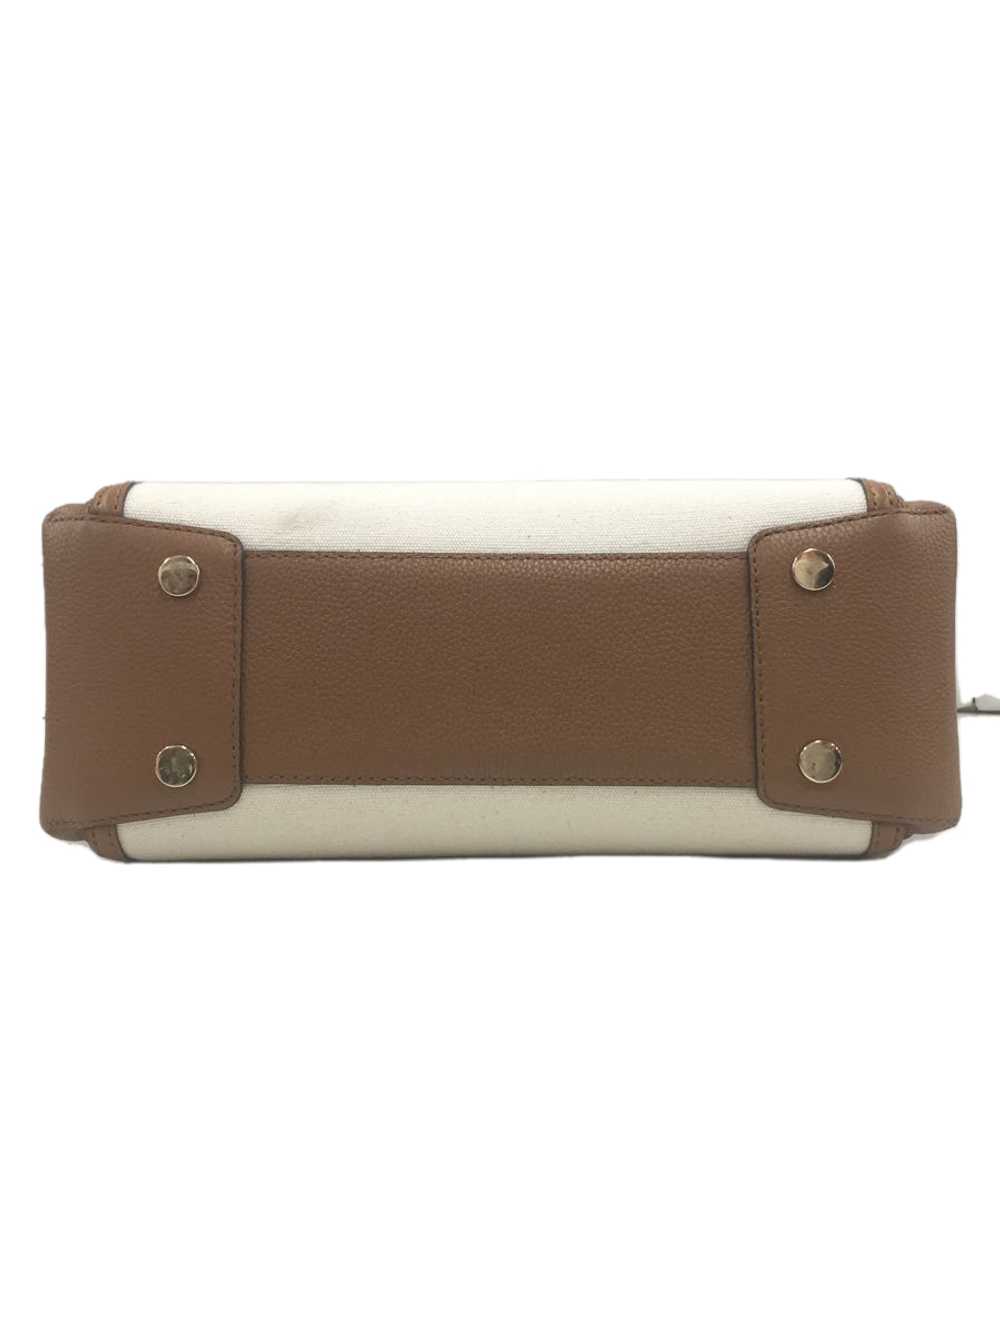 Michael Kors Handbag/Canvas/Brw/Plain Bag - image 4